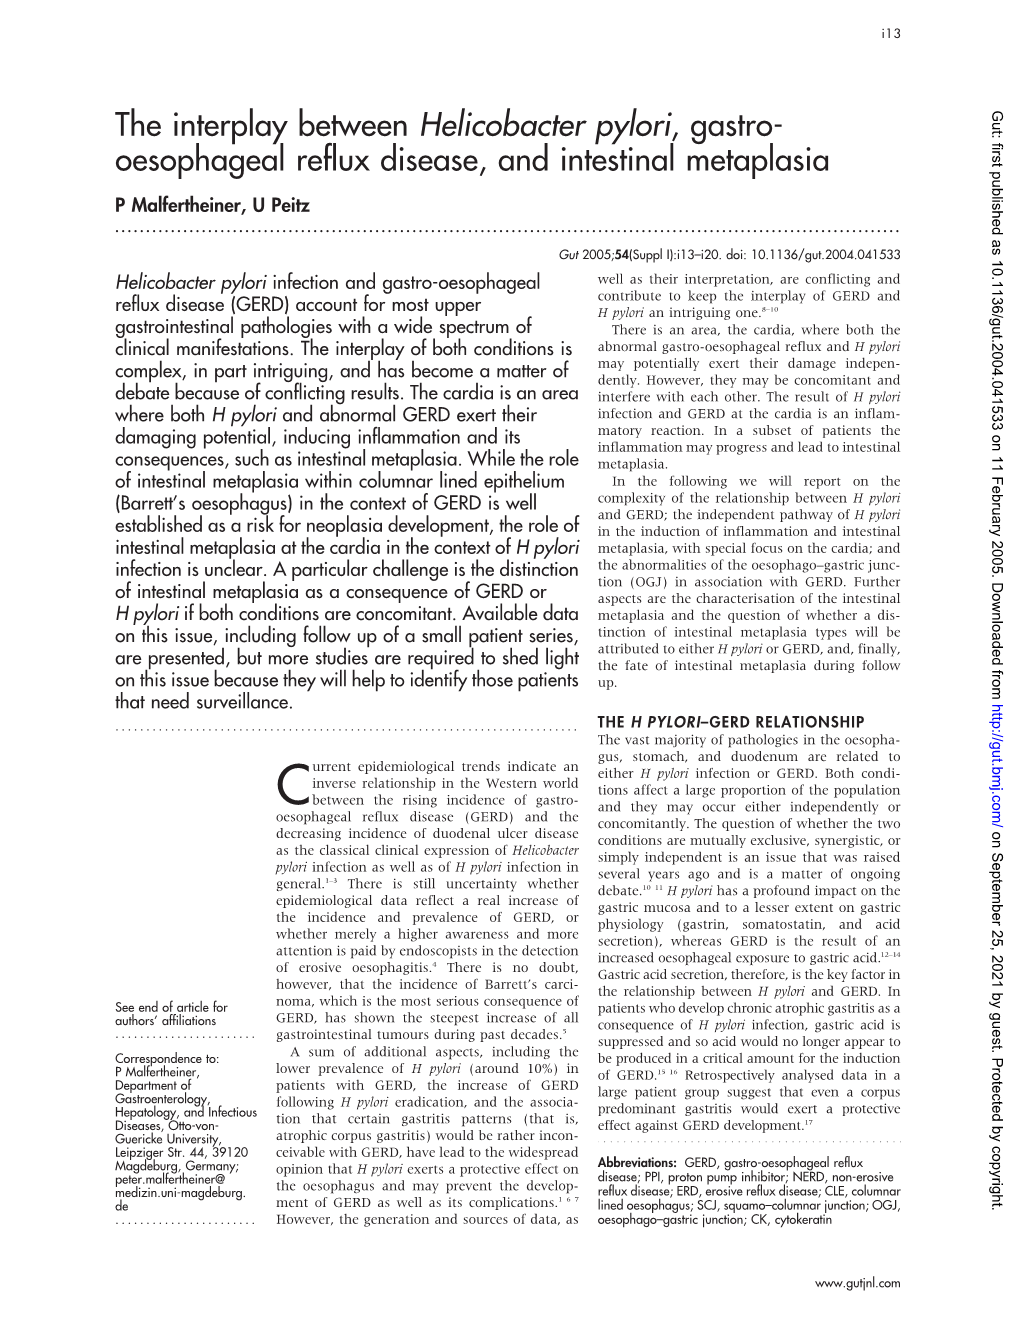 The Interplay Between Helicobacter Pylori, Gastro- Oesophageal Reflux Disease, and Intestinal Metaplasia P Malfertheiner, U Peitz